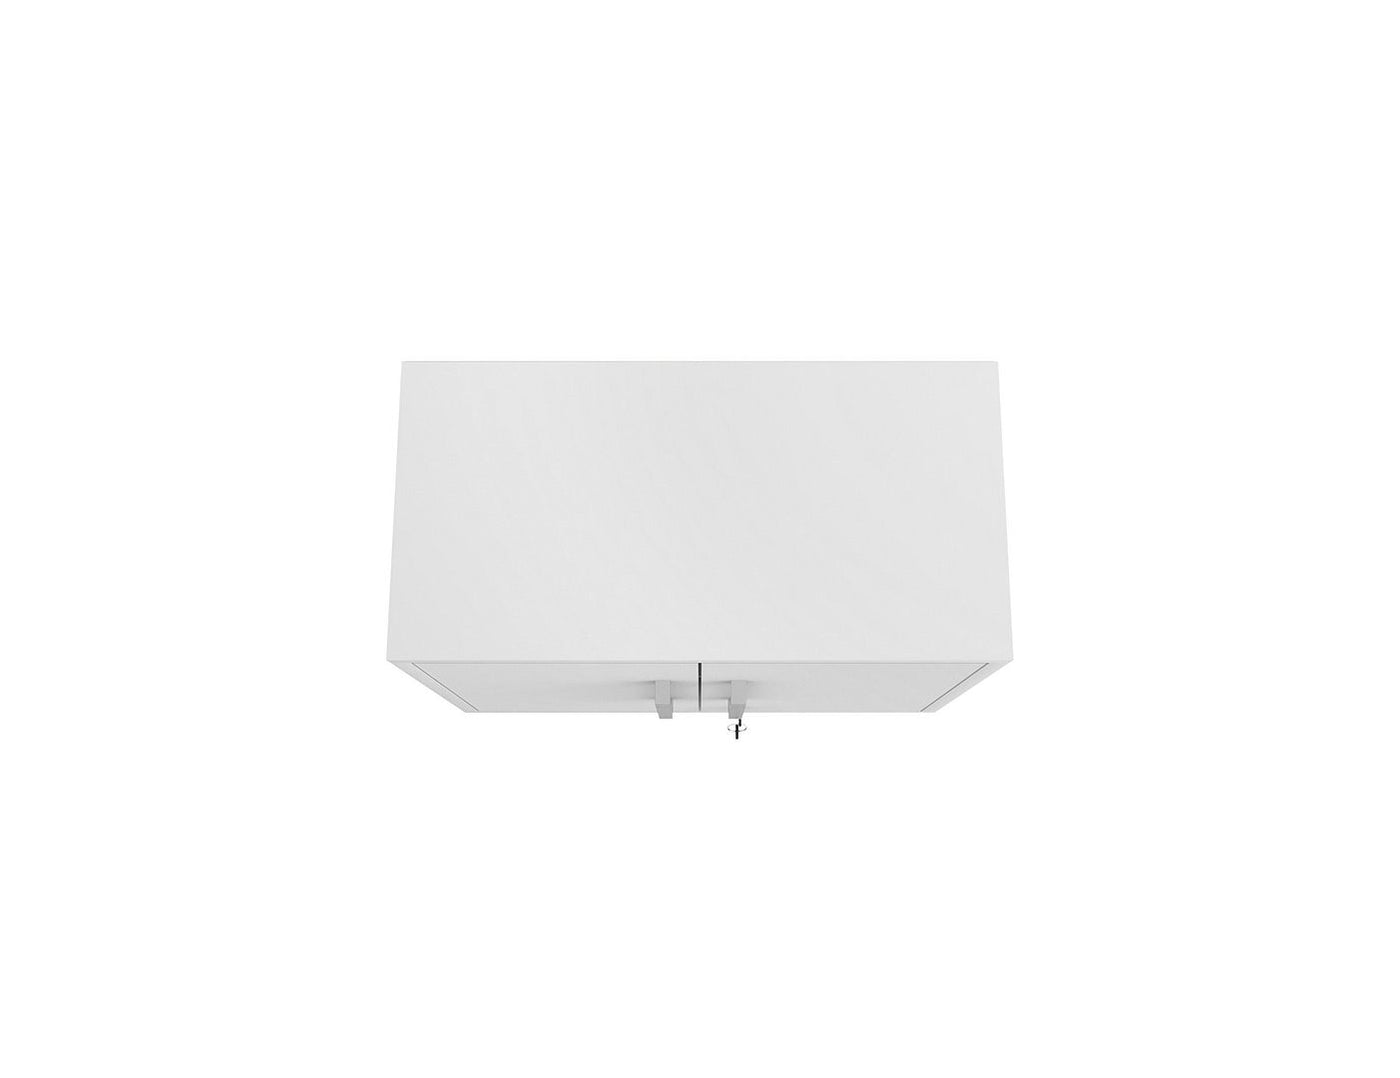 Lunde Floating Garage Cabinet - White - Set of 2